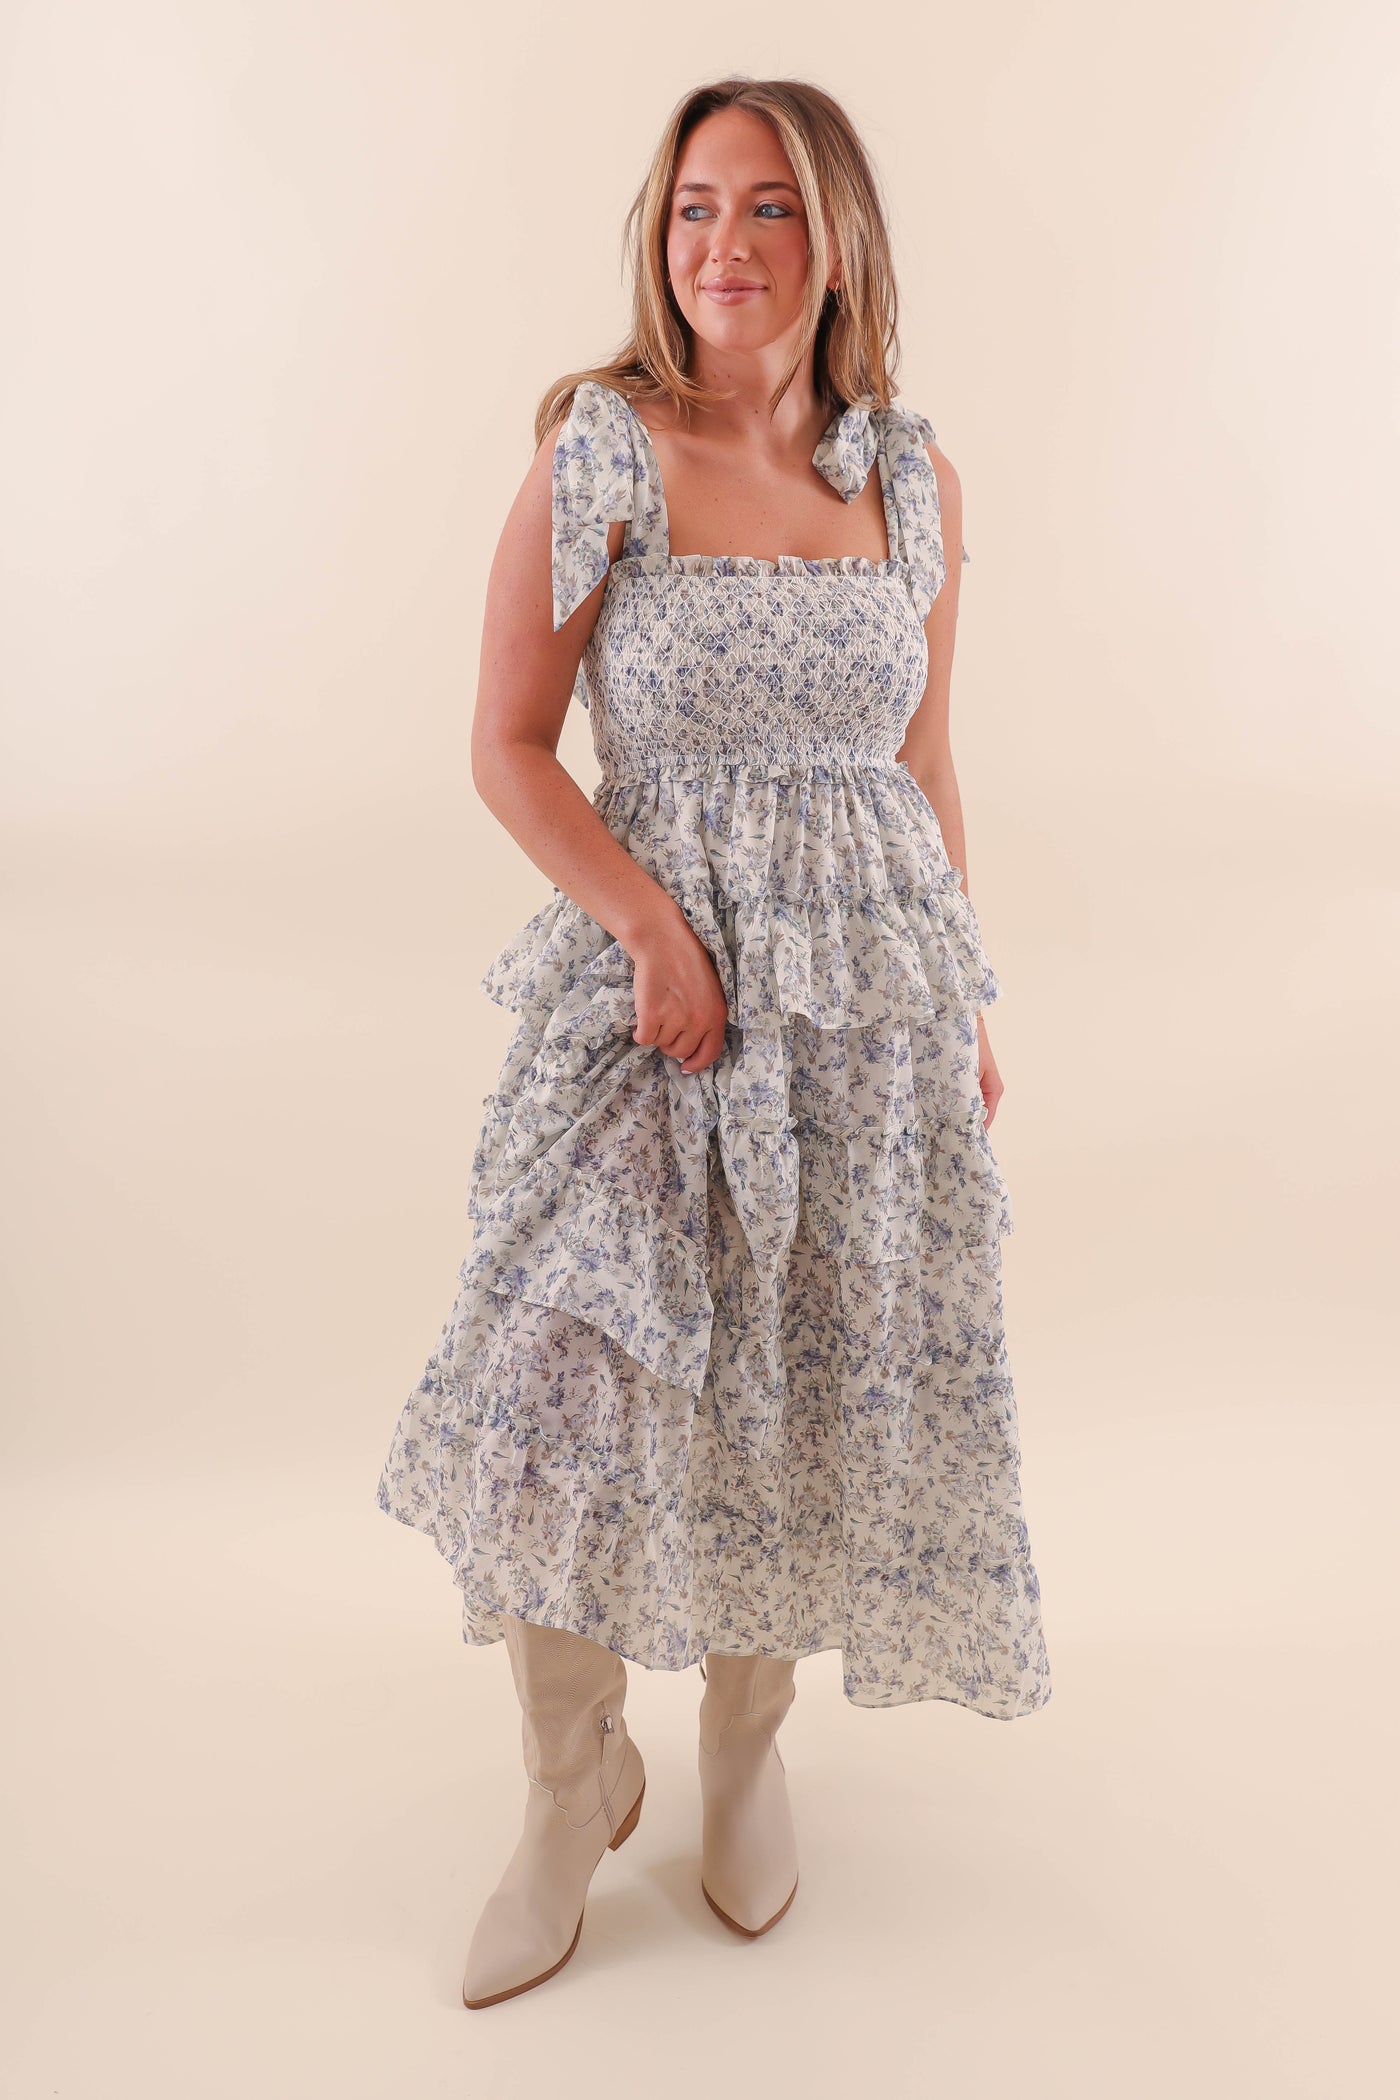 Floral Print Midi Dress- Sofie The Label Floral Midi Dress